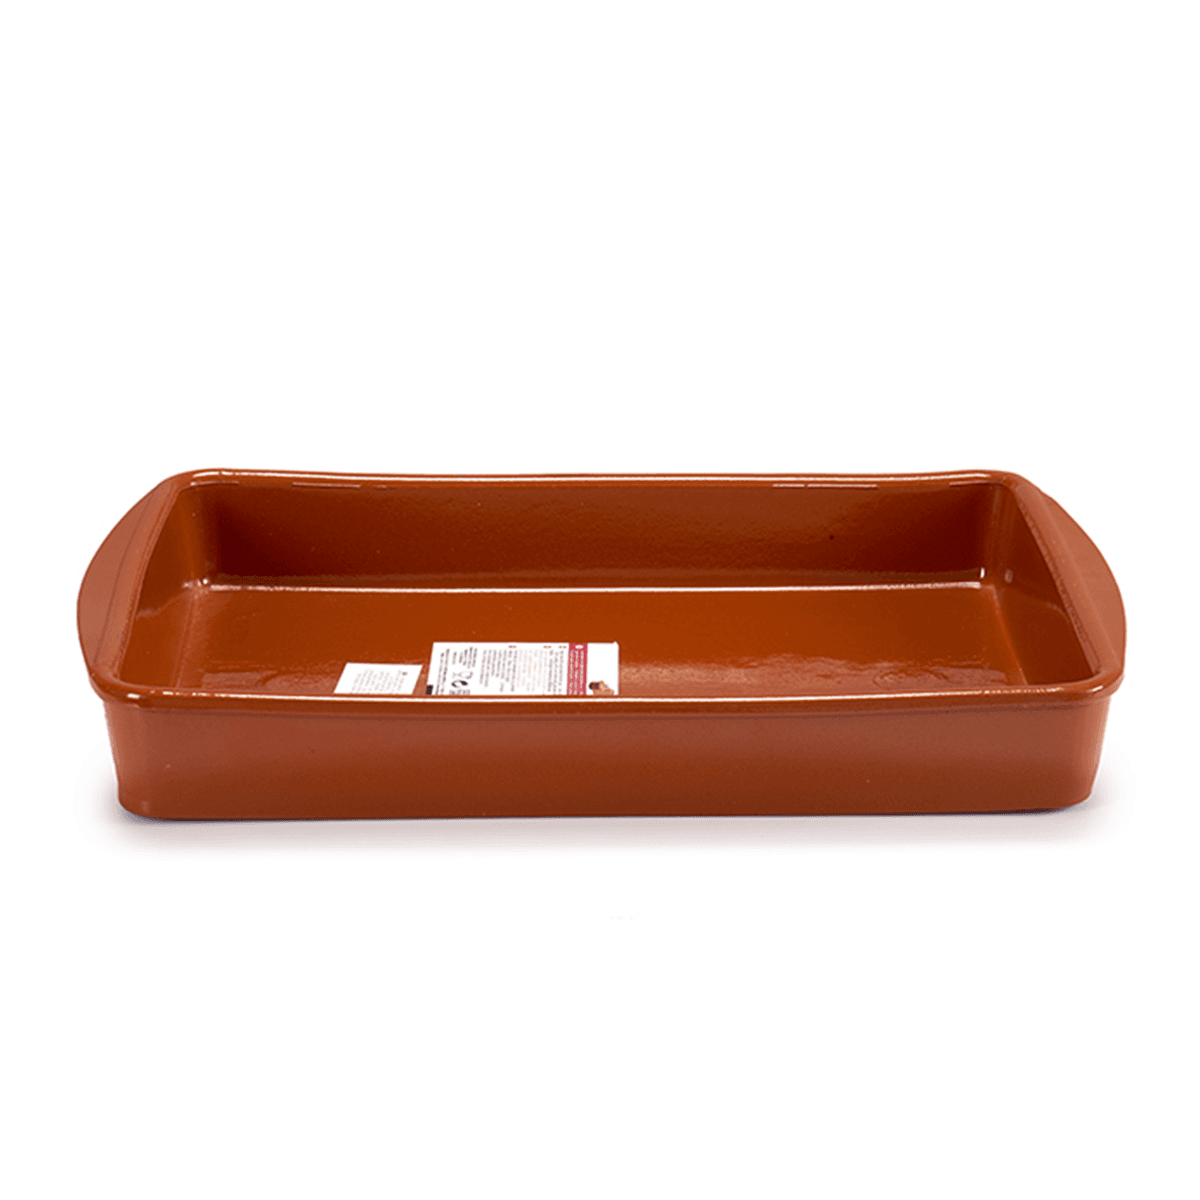 صحن فخار مستطيل عميق لون بني 38 سم صناعة اسبانيا من آرت ريجال Arte Regal Brown Clay Deep Rectangular Plate